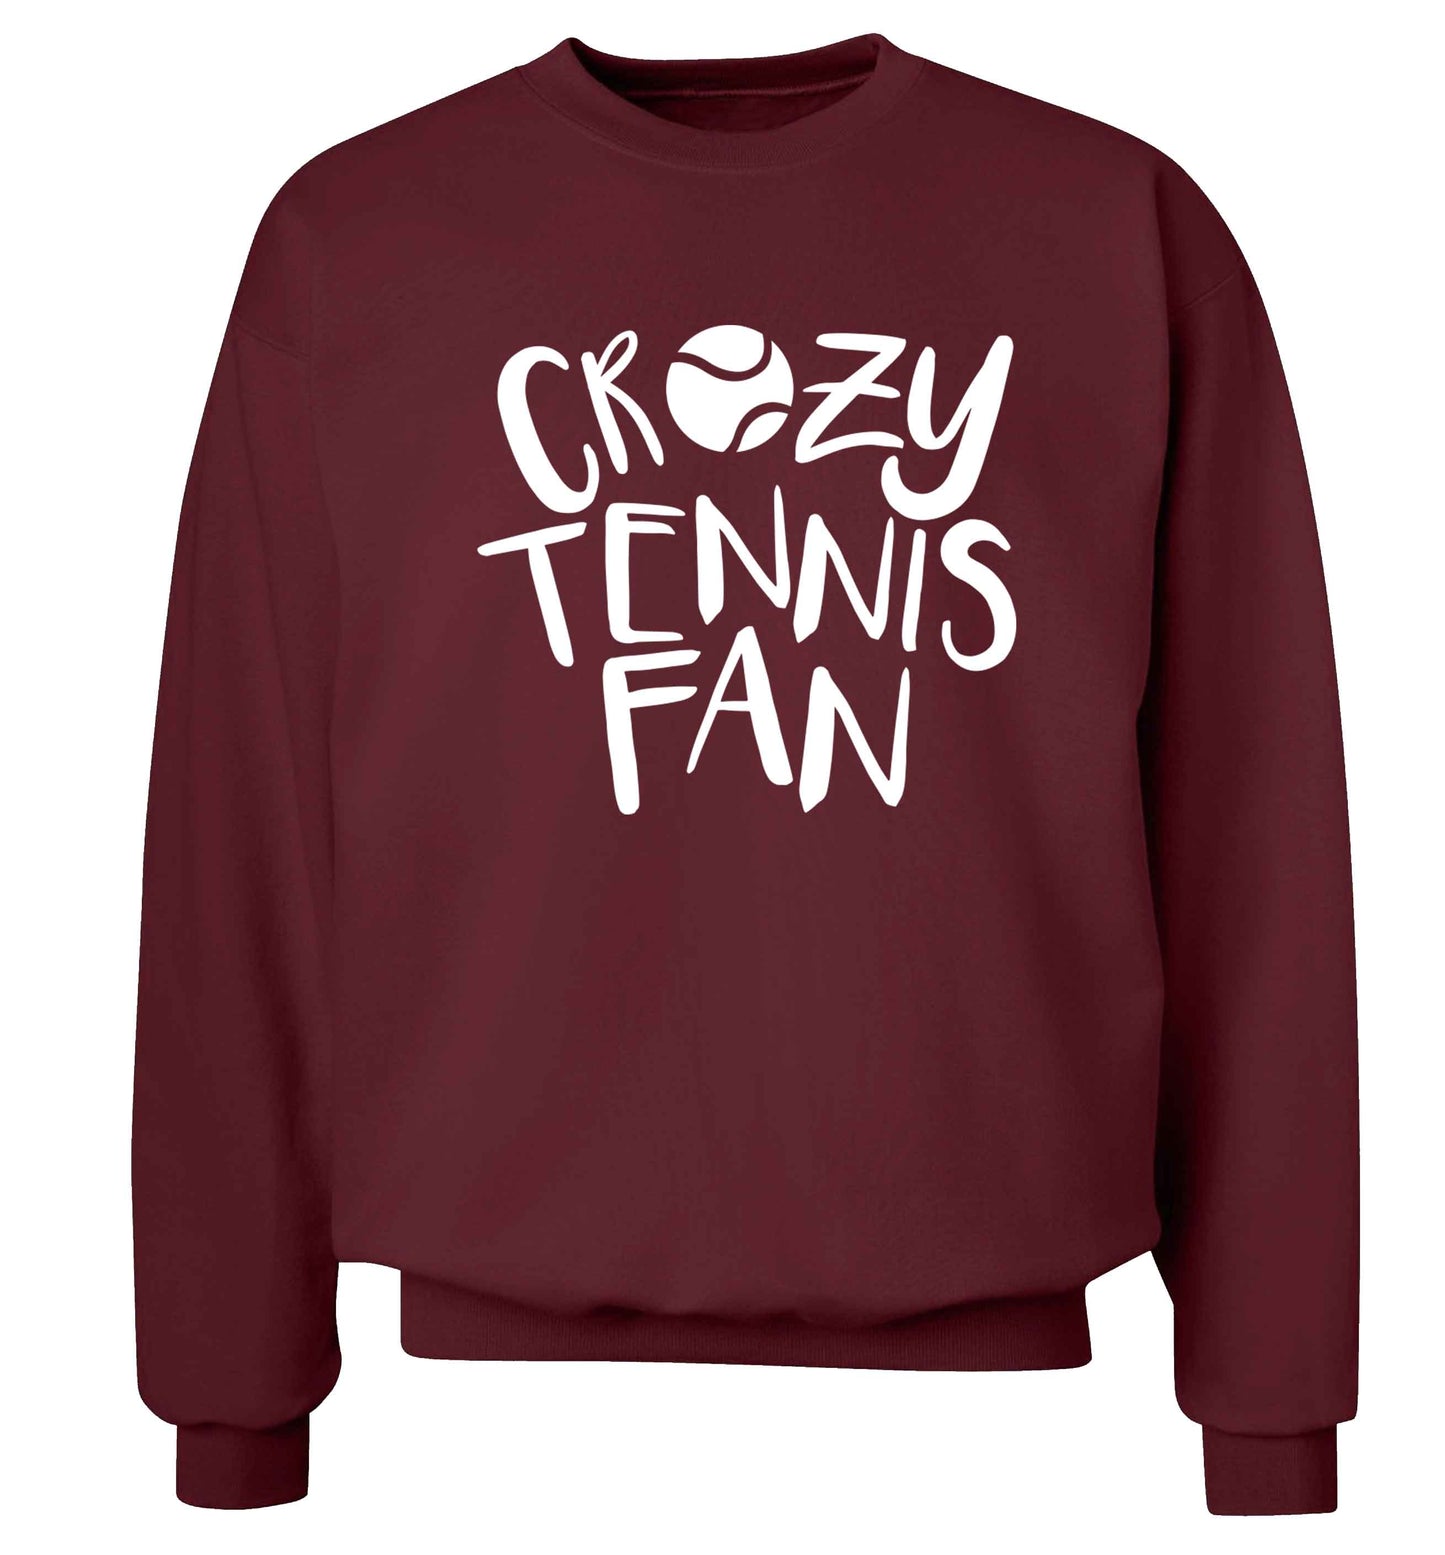 Crazy tennis fan Adult's unisex maroon Sweater 2XL